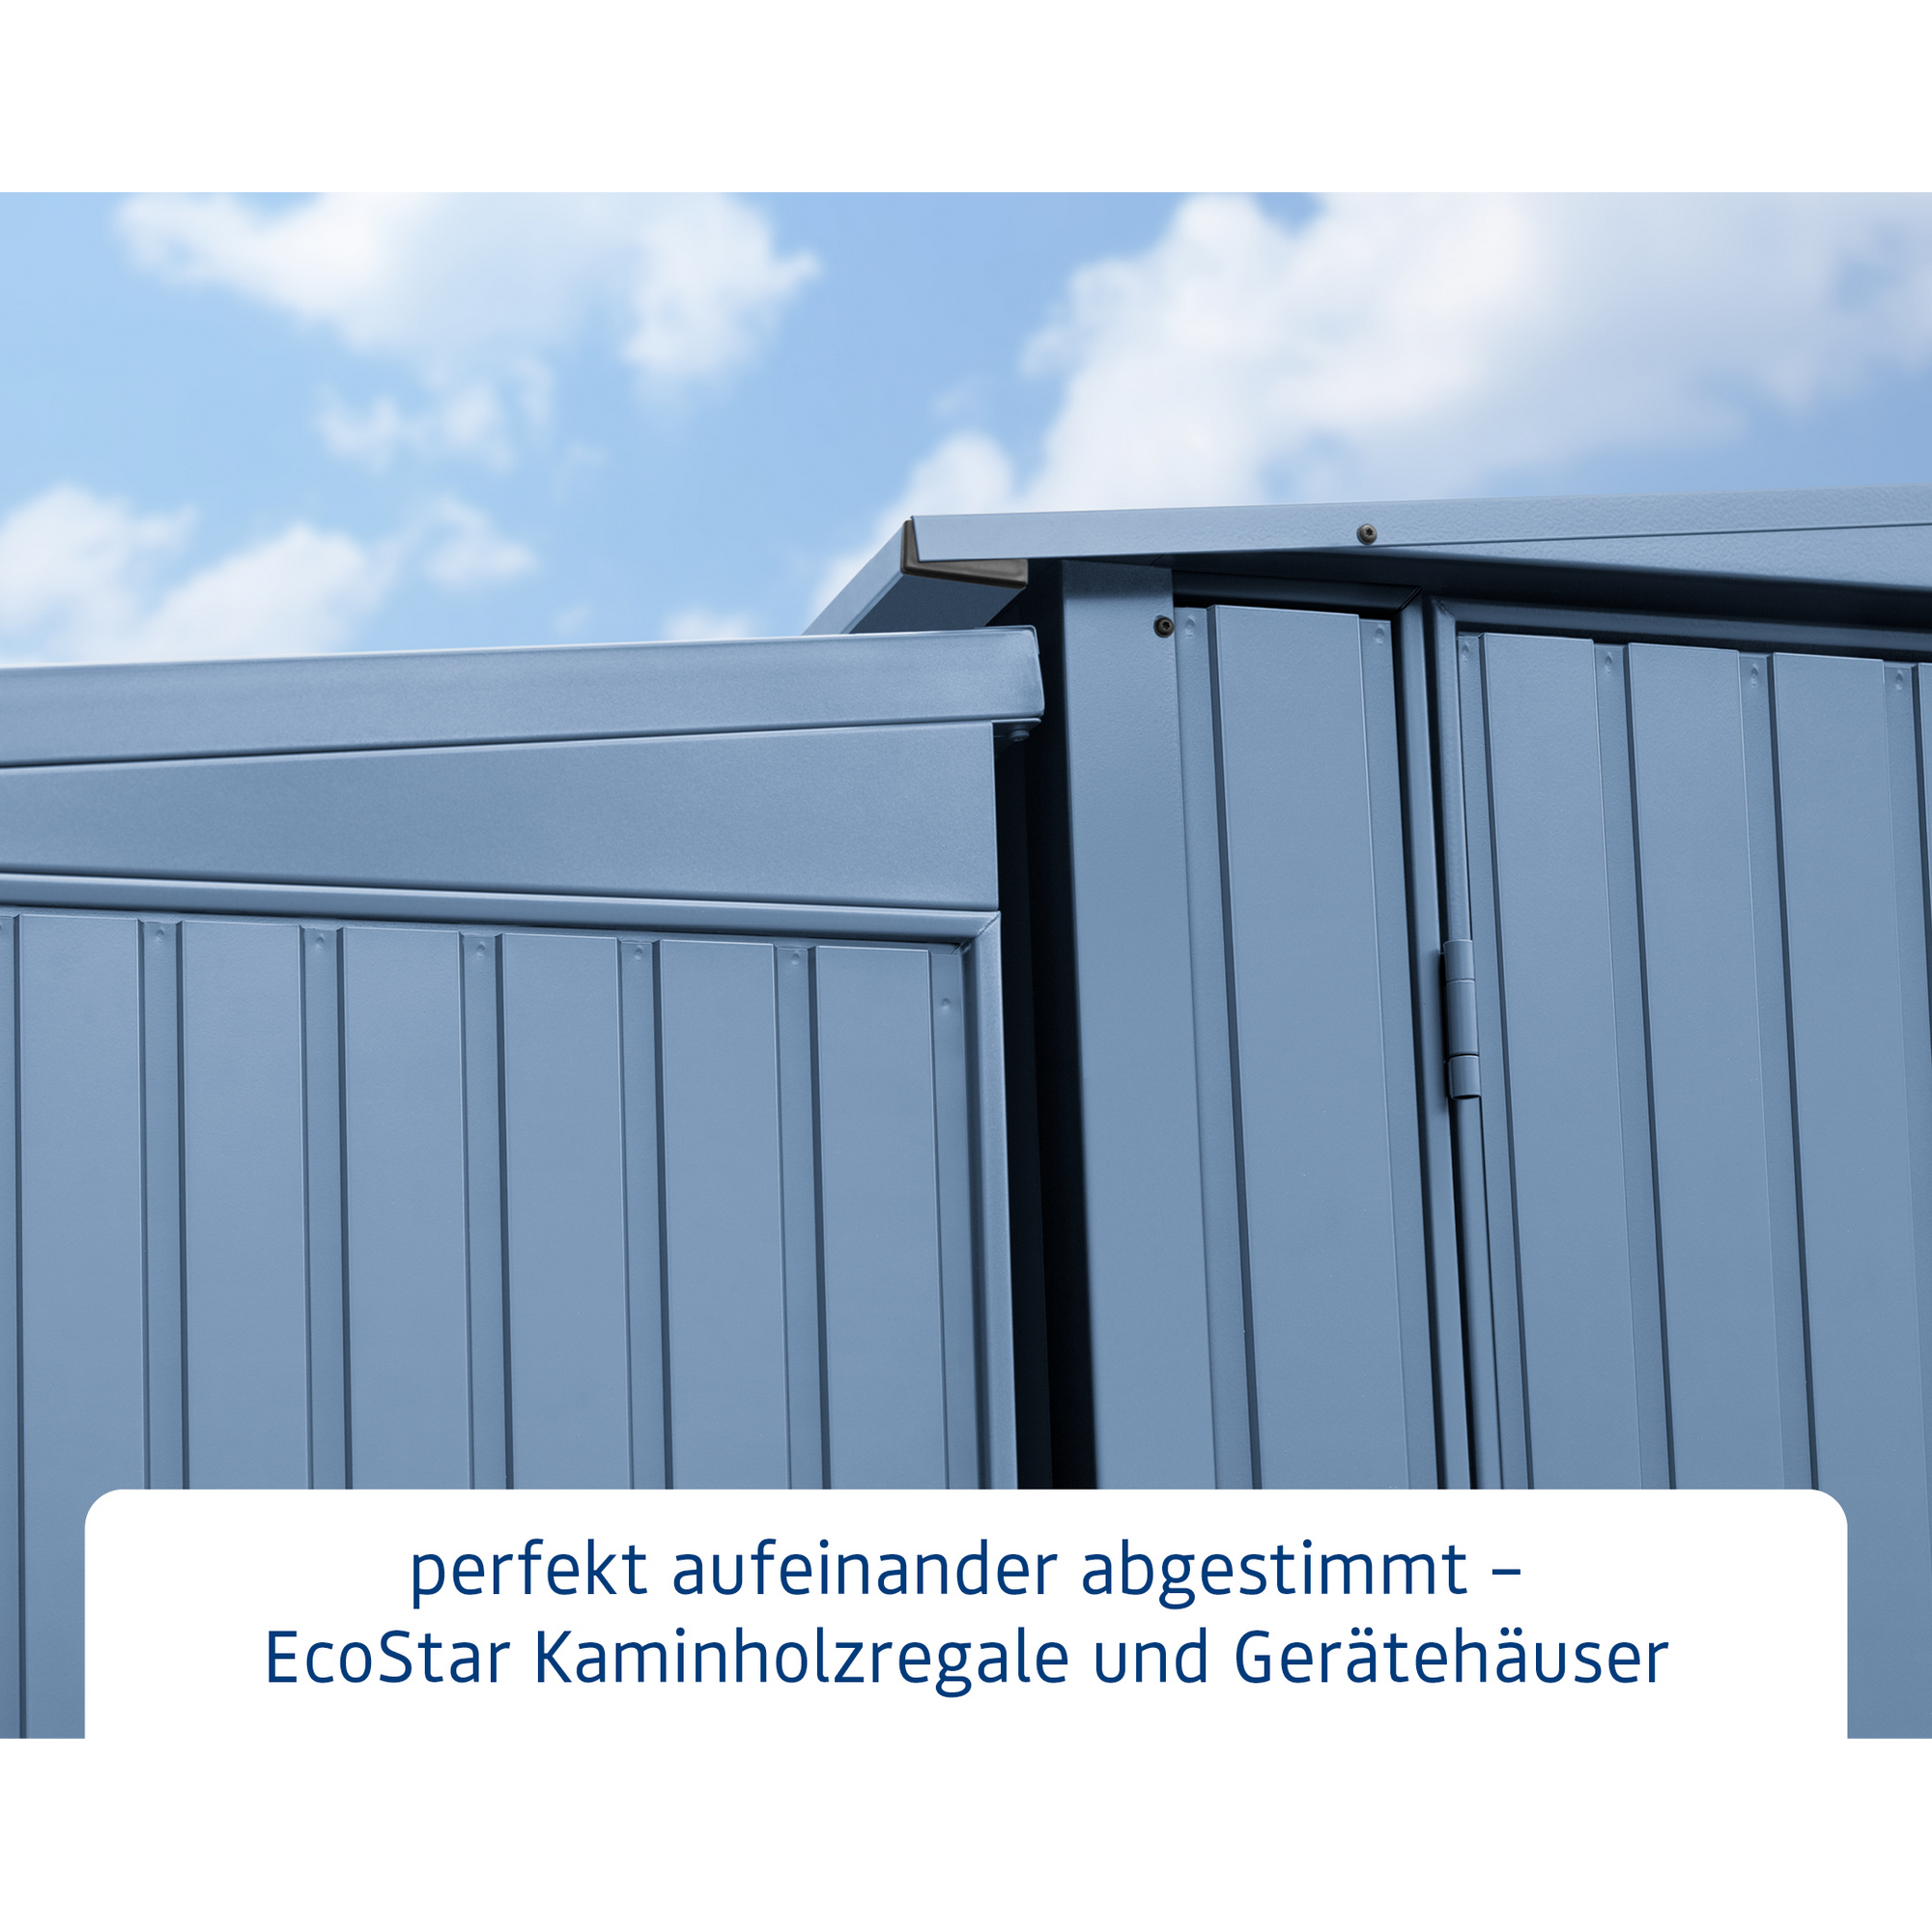 Kaminholzregal 'TrendTyp 1' taubenblau 102,5 x 122,7 x 198 cm + product picture